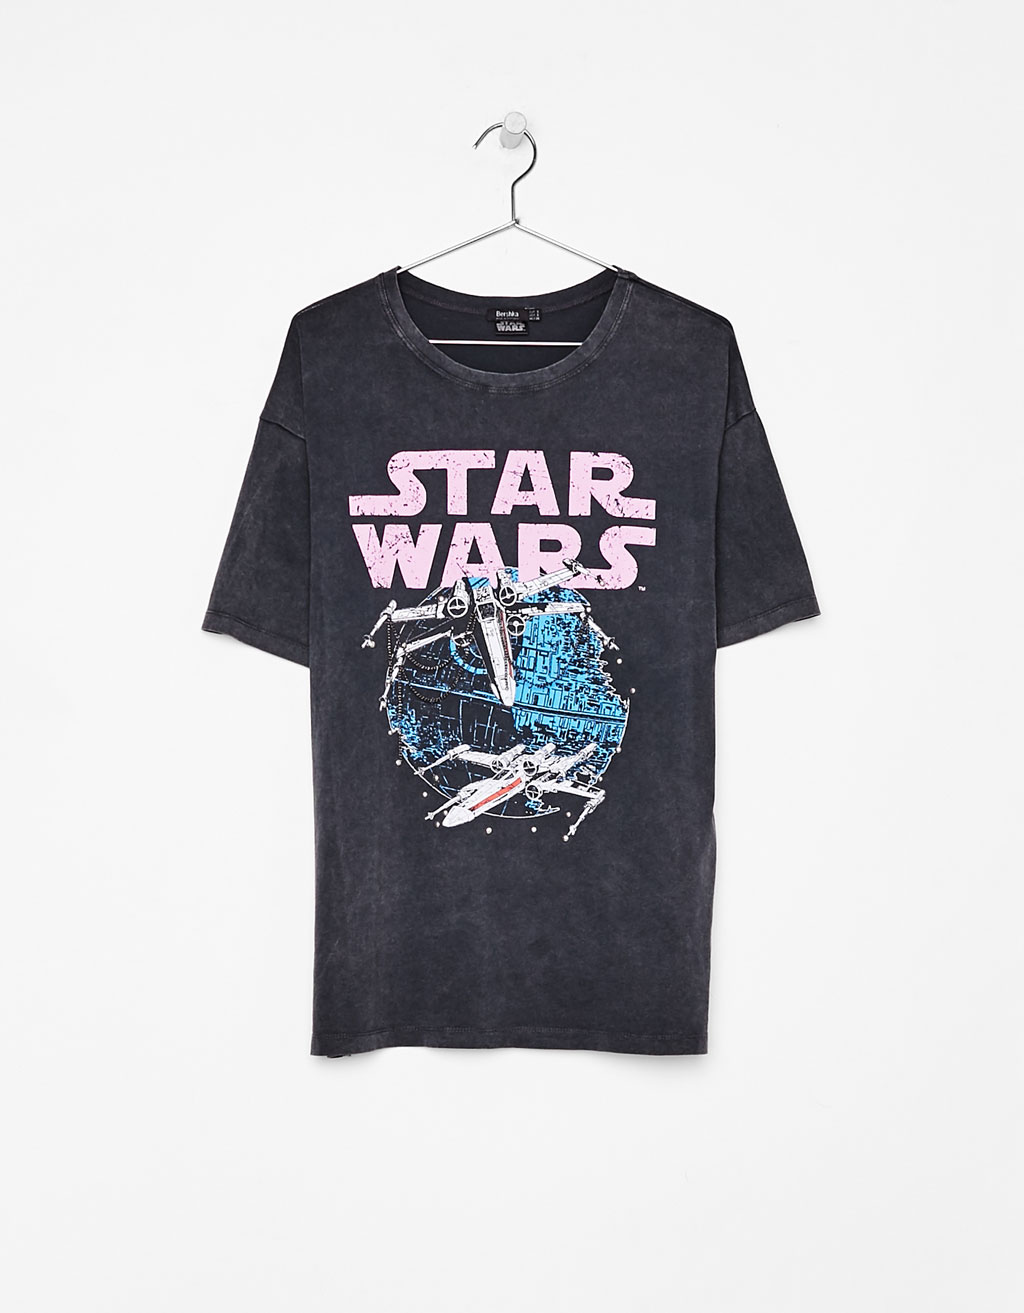 T-shirt Star Wars com correntes, Bershka, €15,99